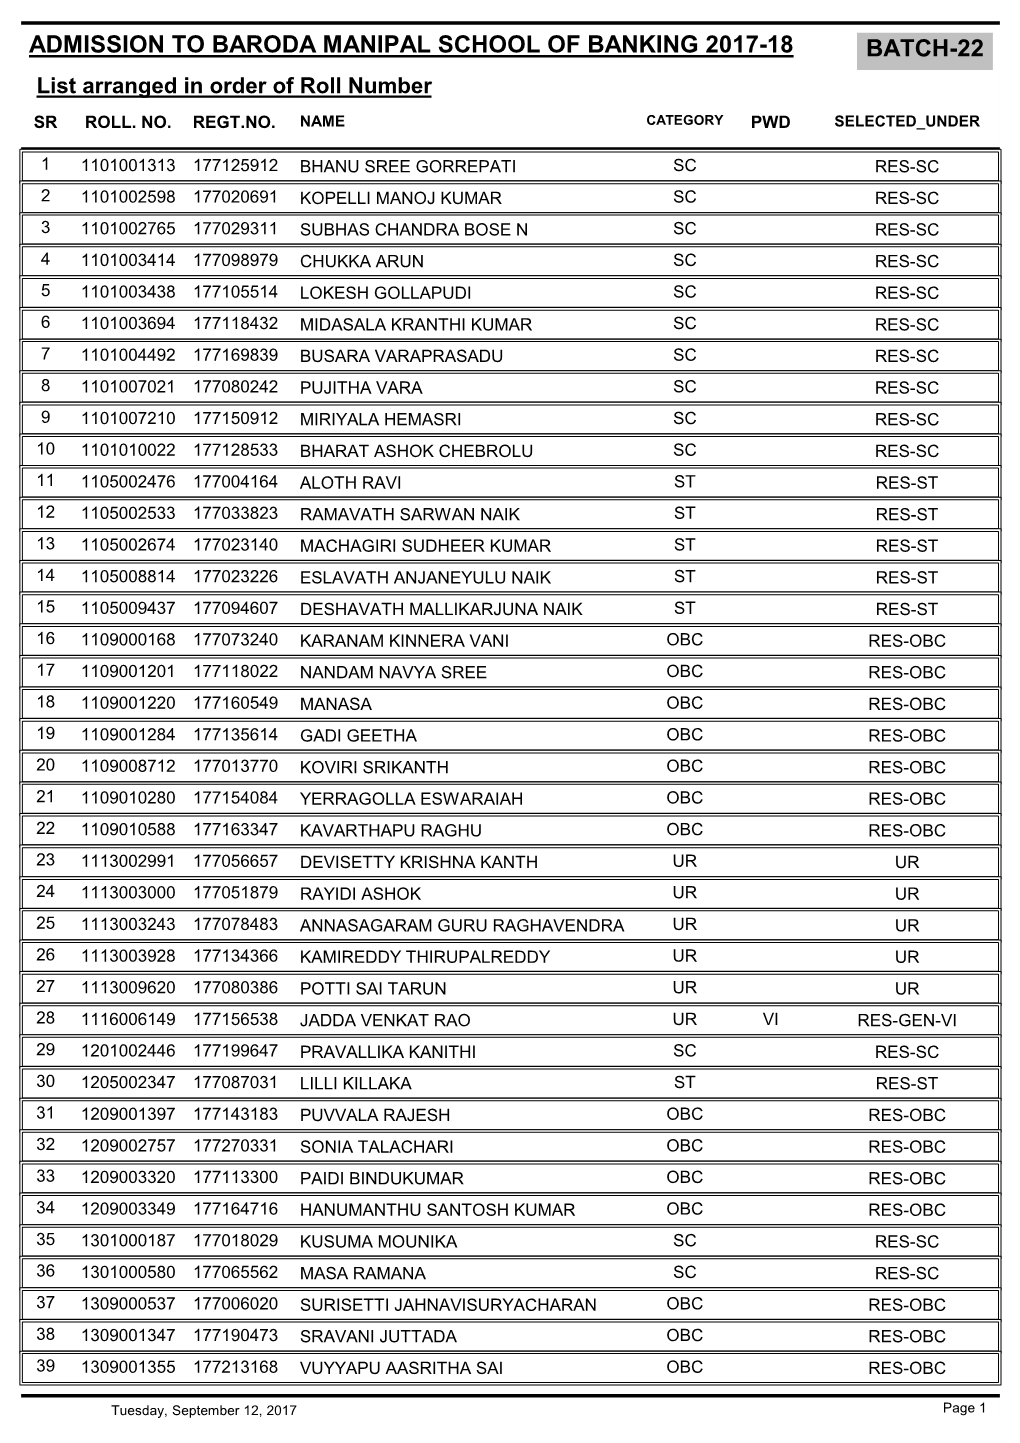 BATCH-22 List Arranged in Order of Roll Number SR ROLL